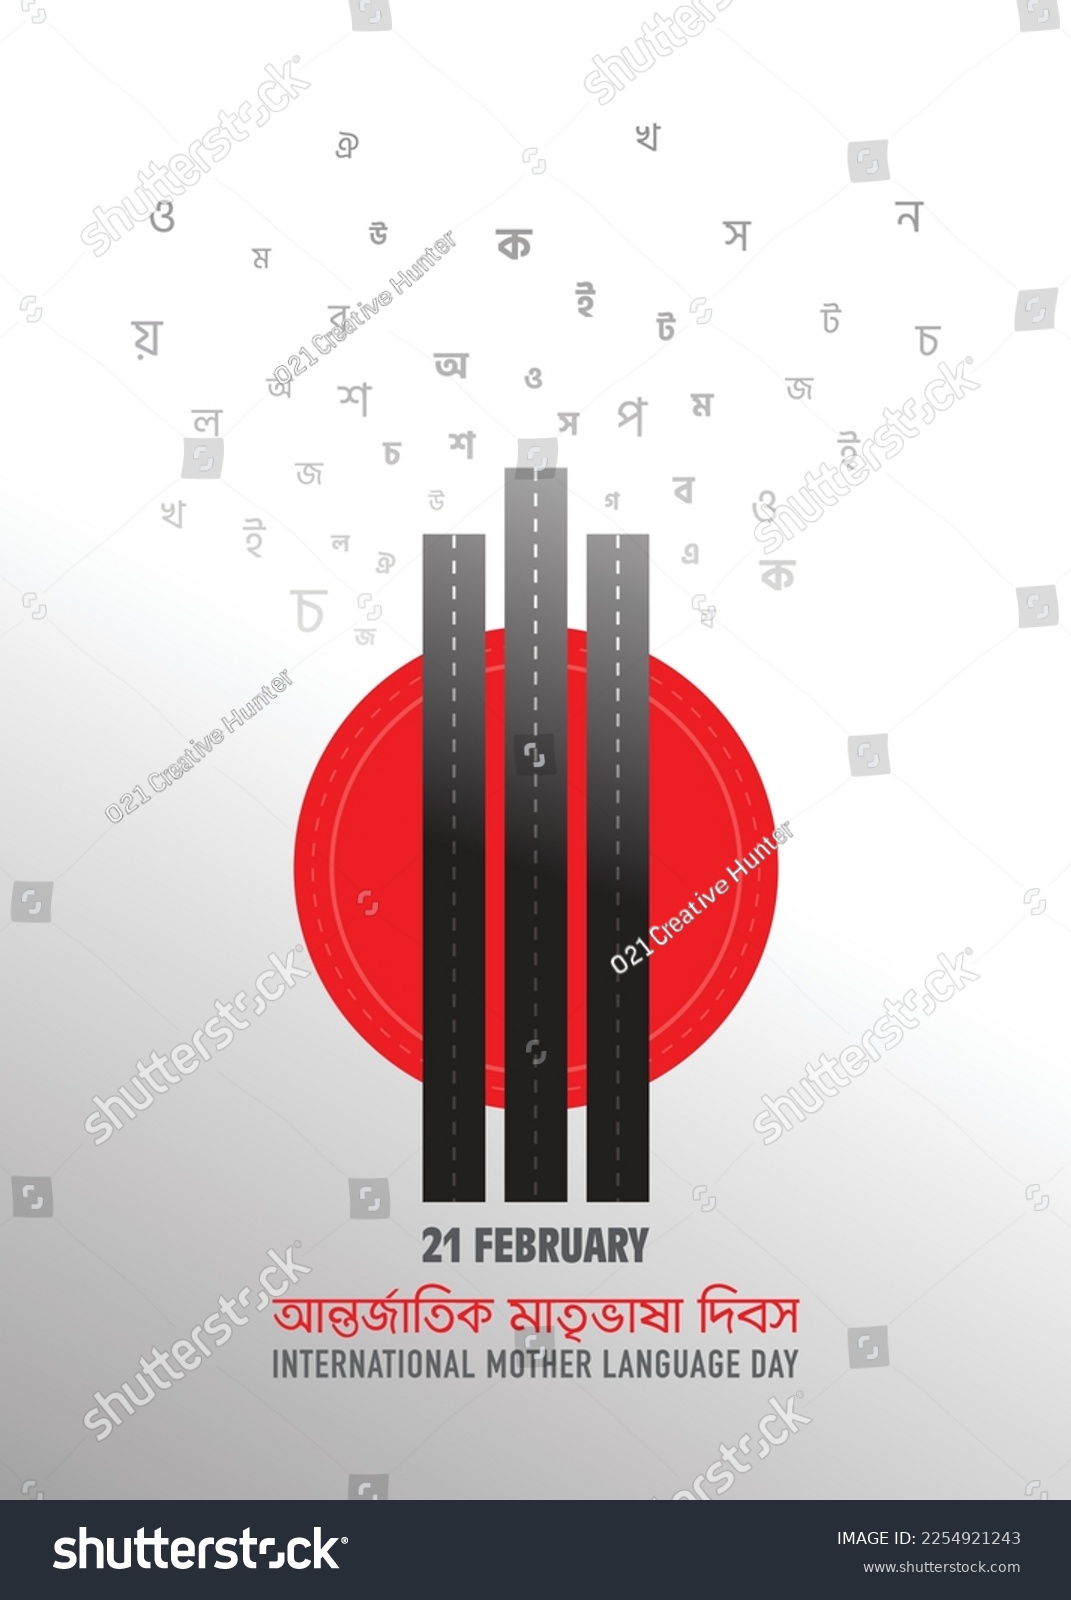 SVG of Shaheed Minar, the Bengali words say 